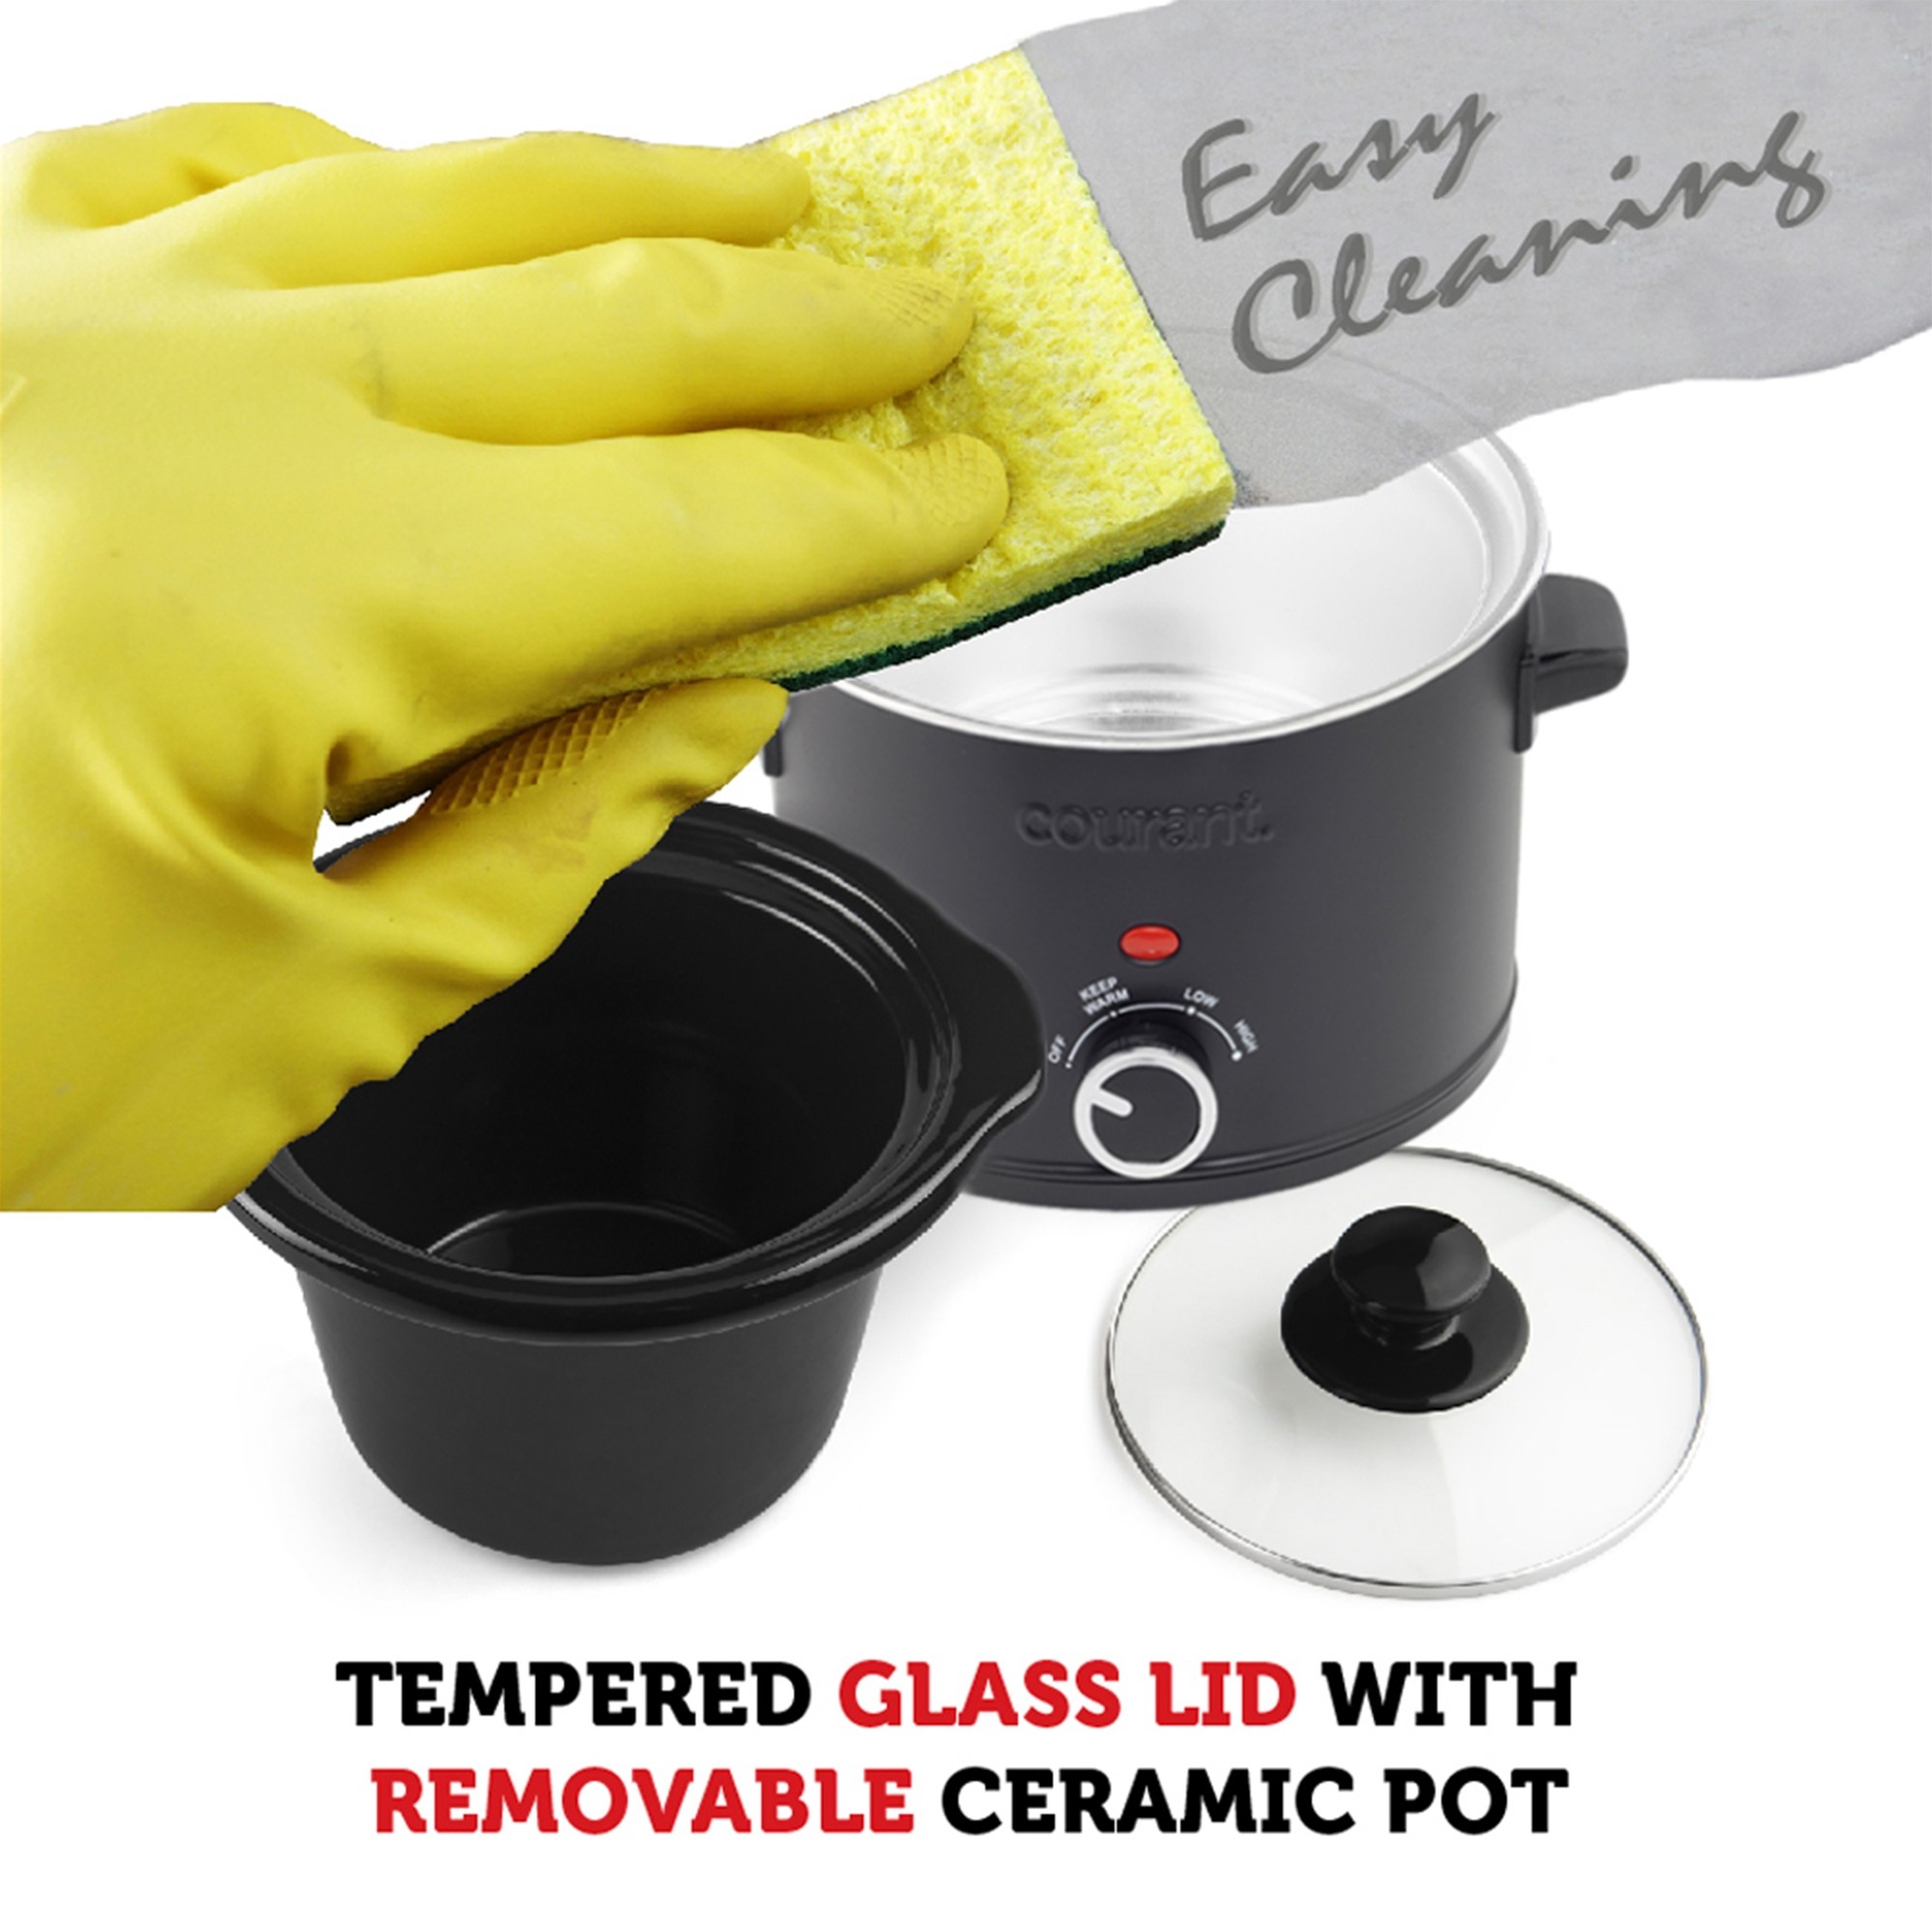 Courant 5 qt. Slow Cooker, Removable Ceramic Pot, Keep Warm